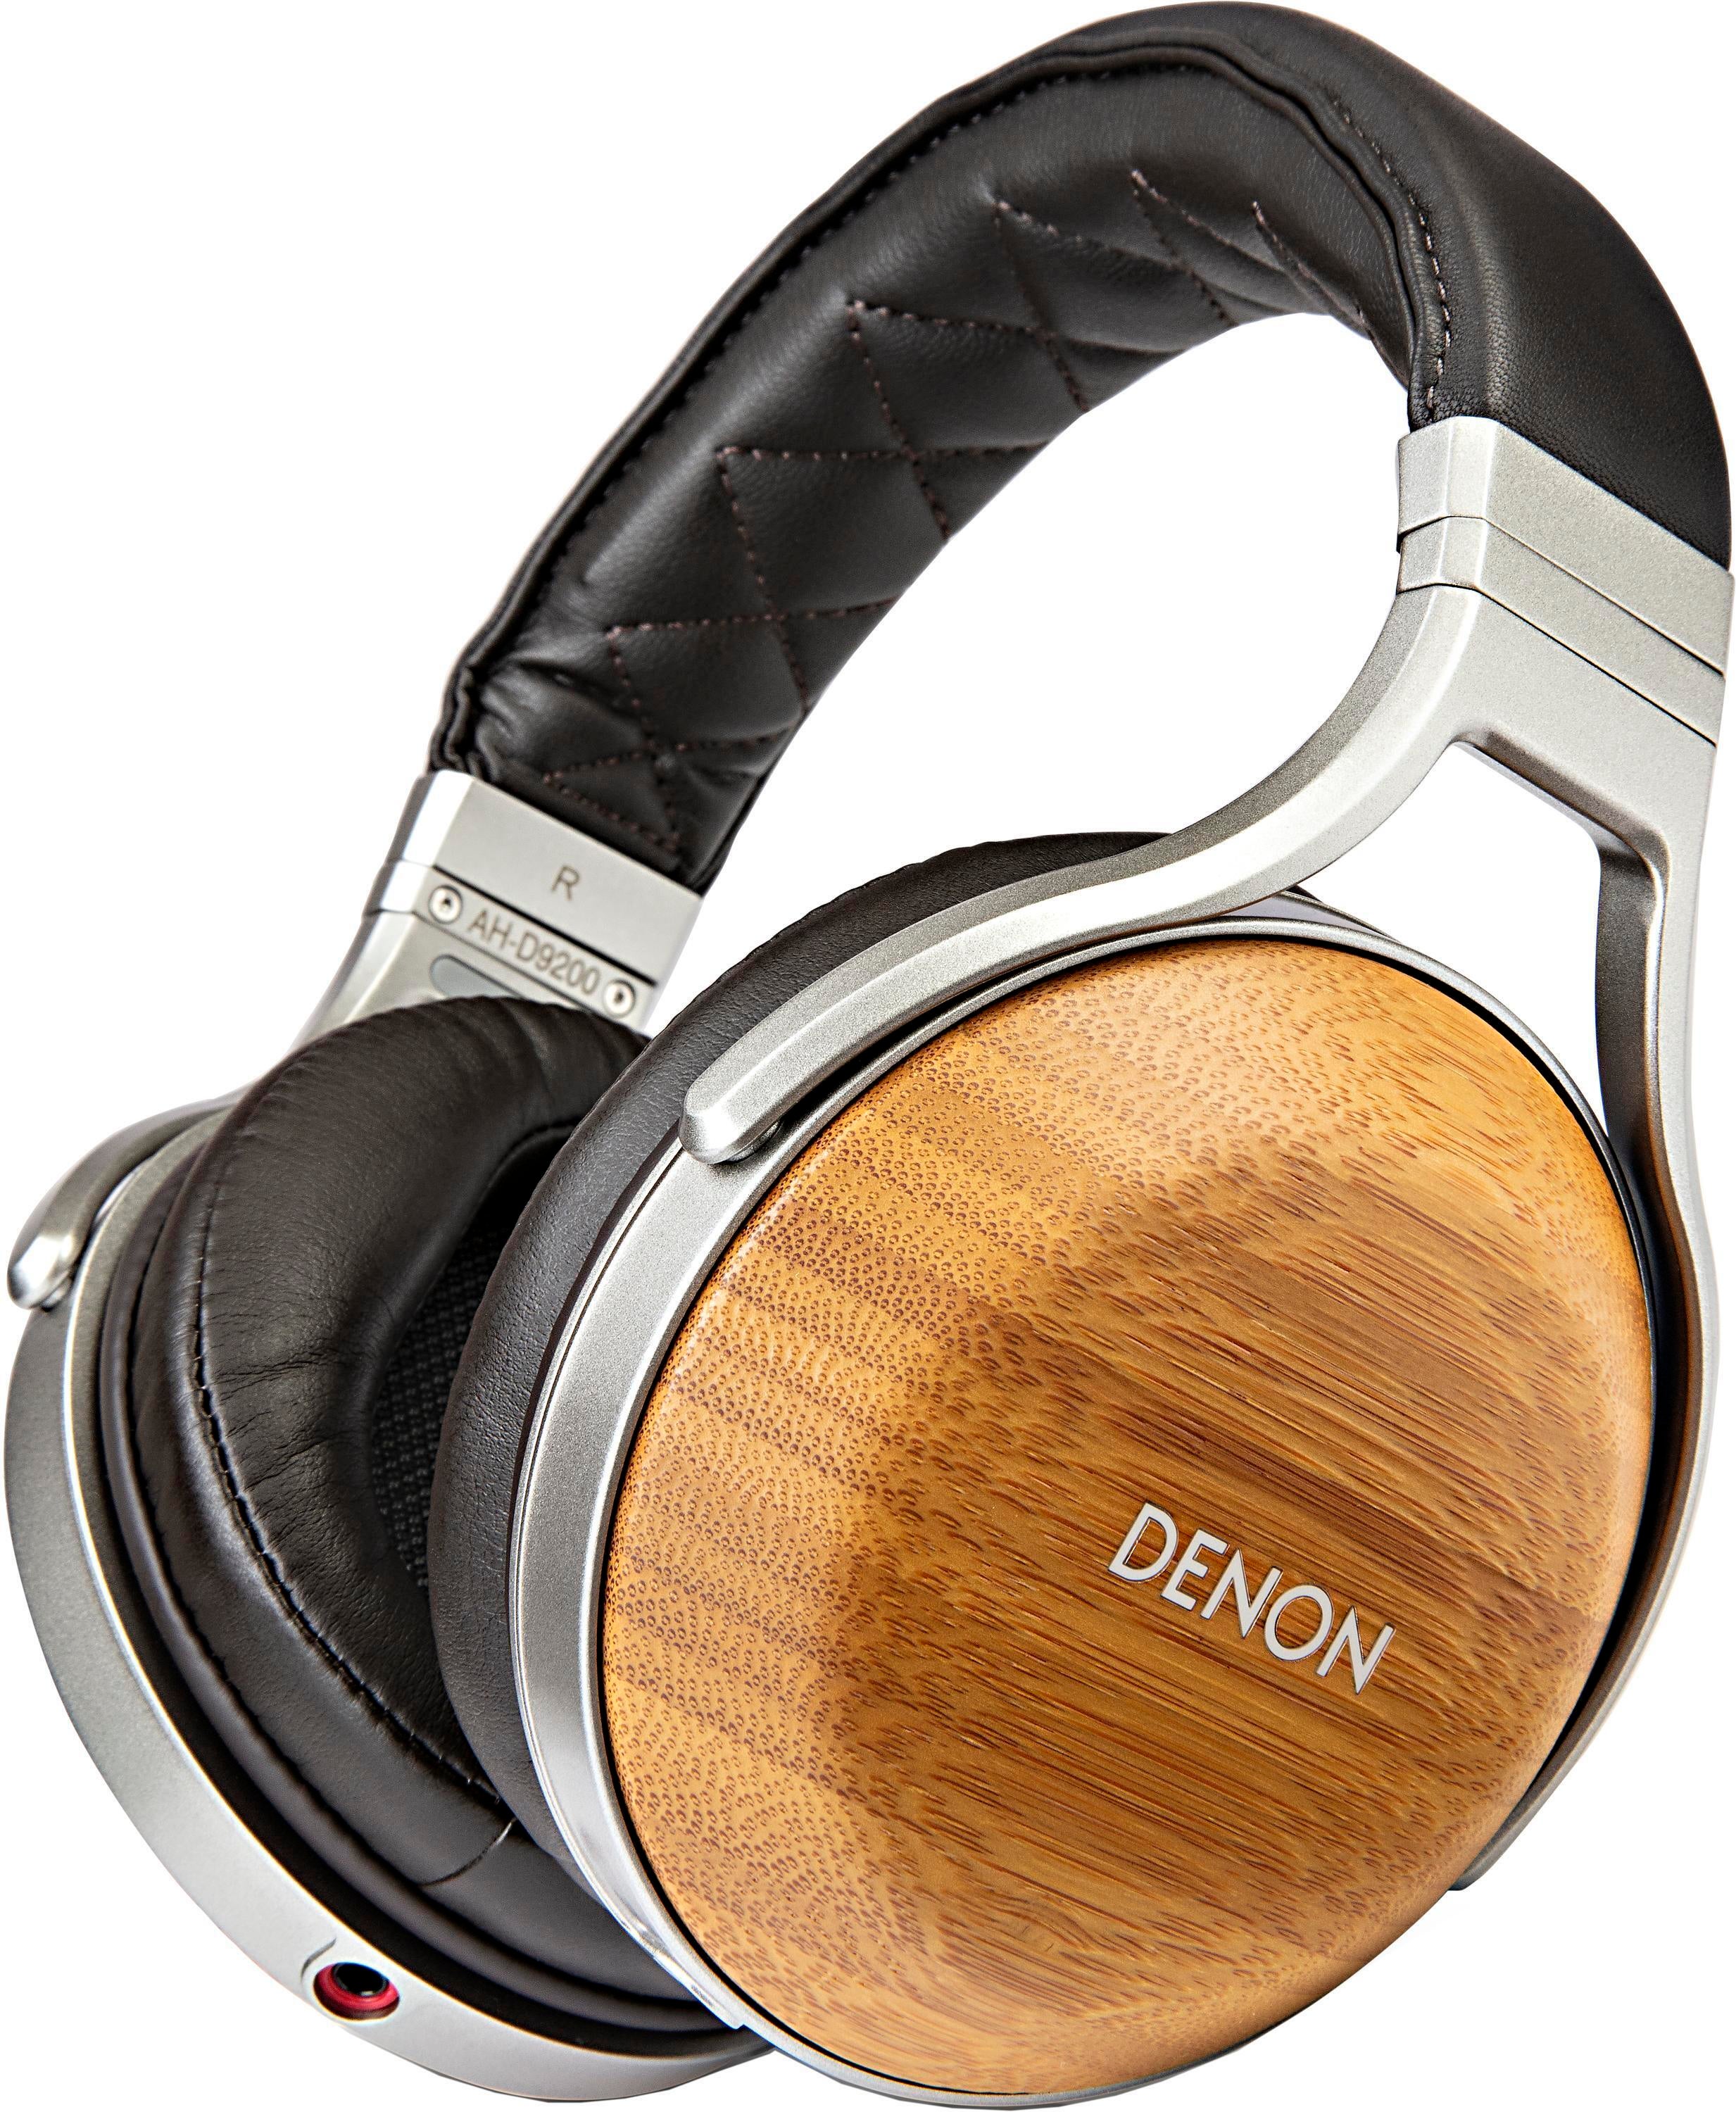 Denon AH-D9200 Closed-Back Headphones - Brown